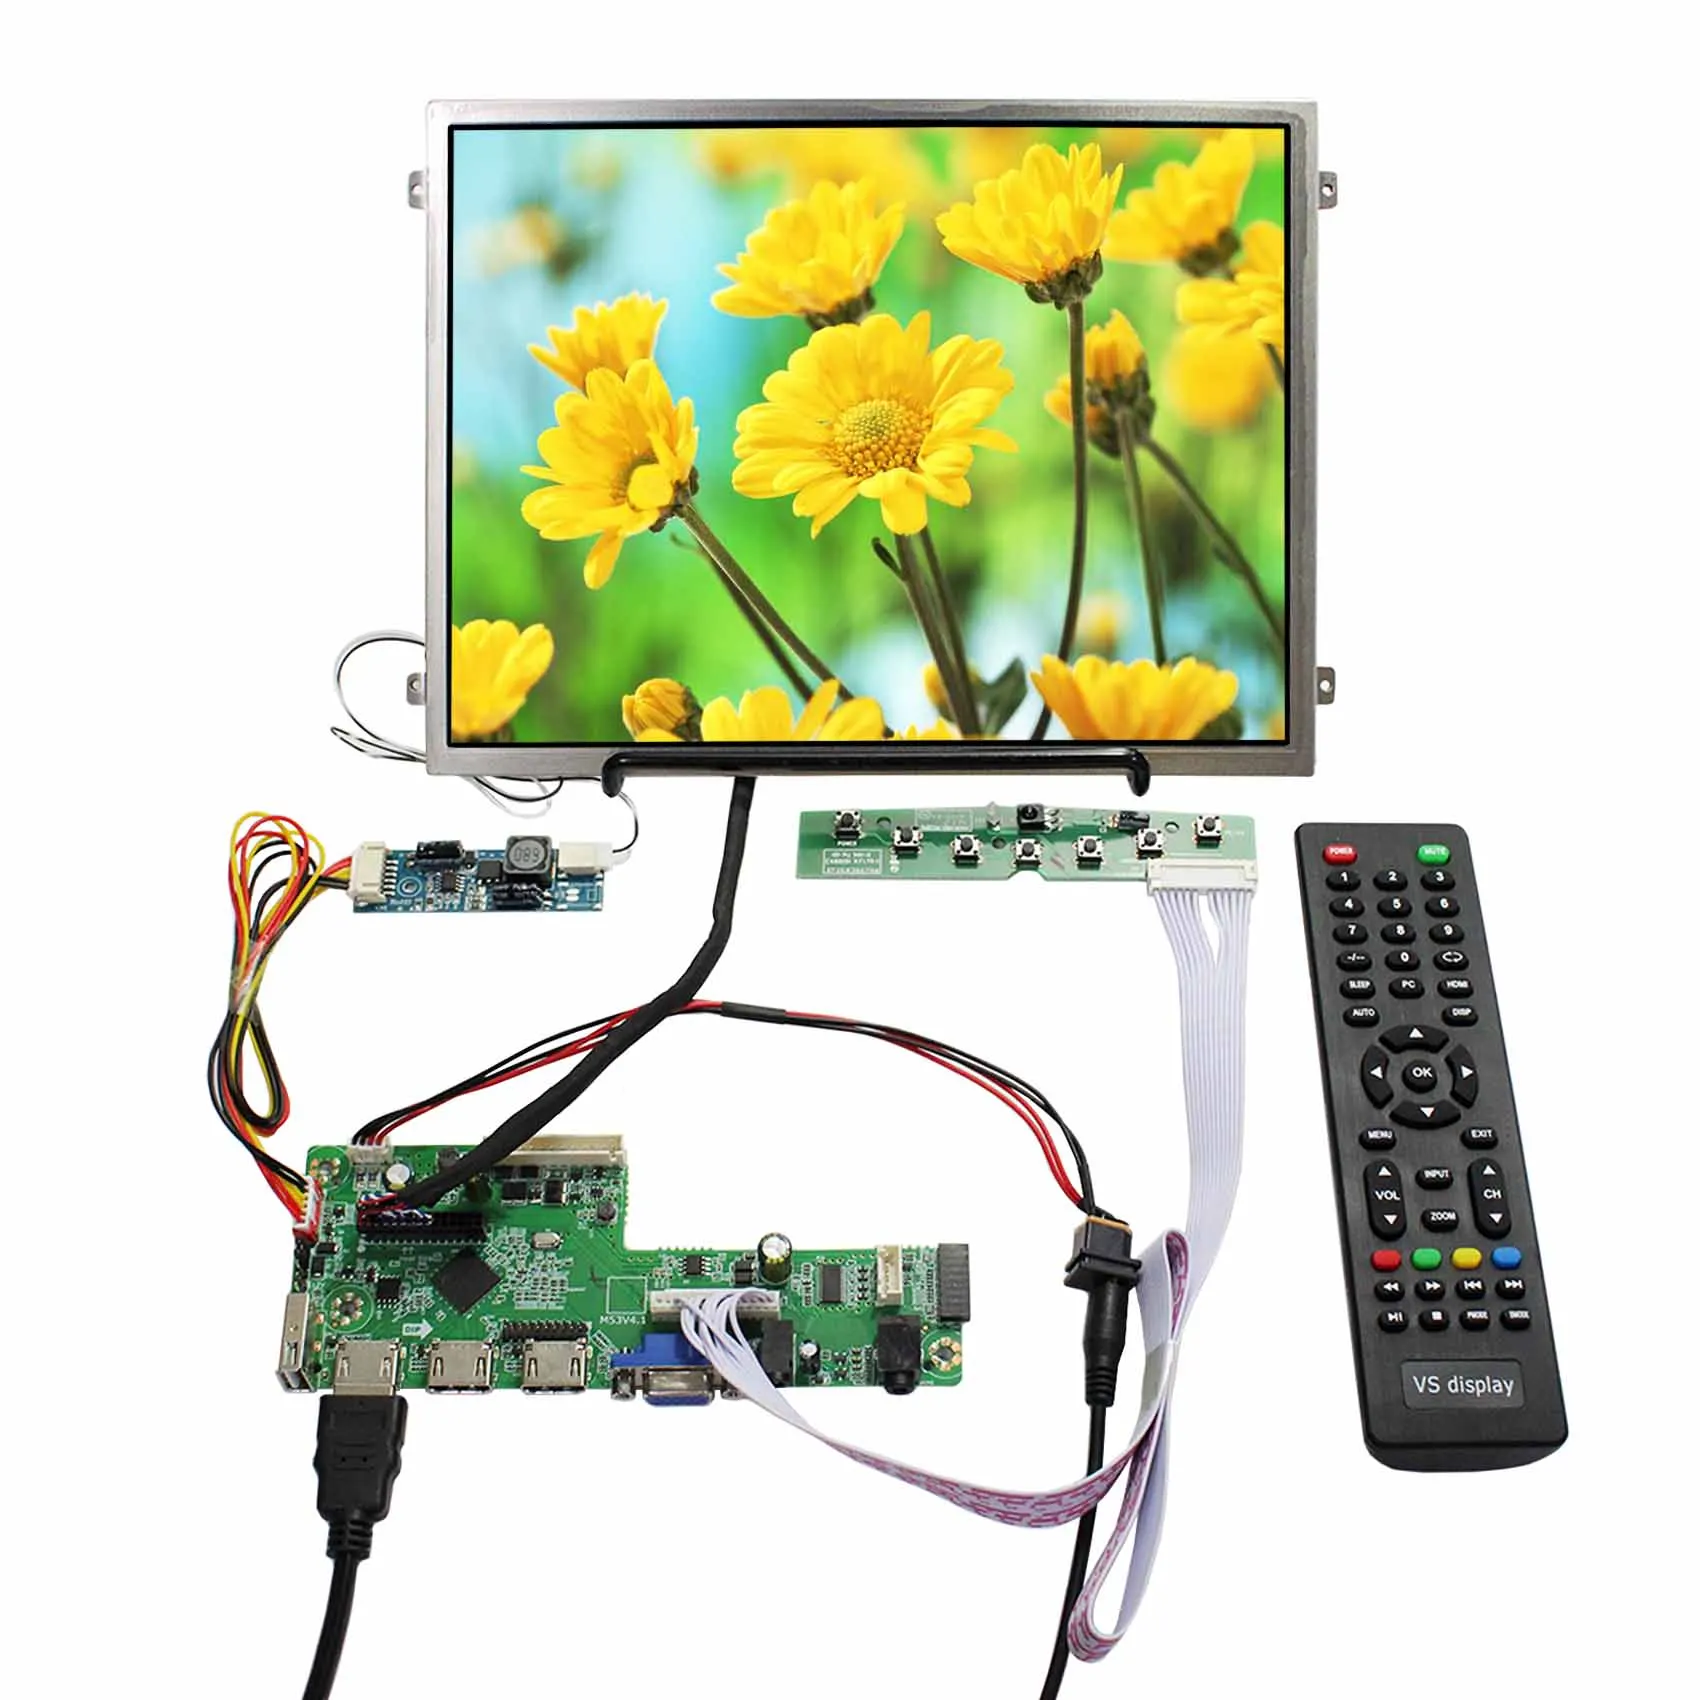 

VSDISPLAY 10.4inch 1024x768 IPS LCD Screen 10.4inch Brightness 500nit Display with HD-MI USB VAG AUDIO LCD controller Board